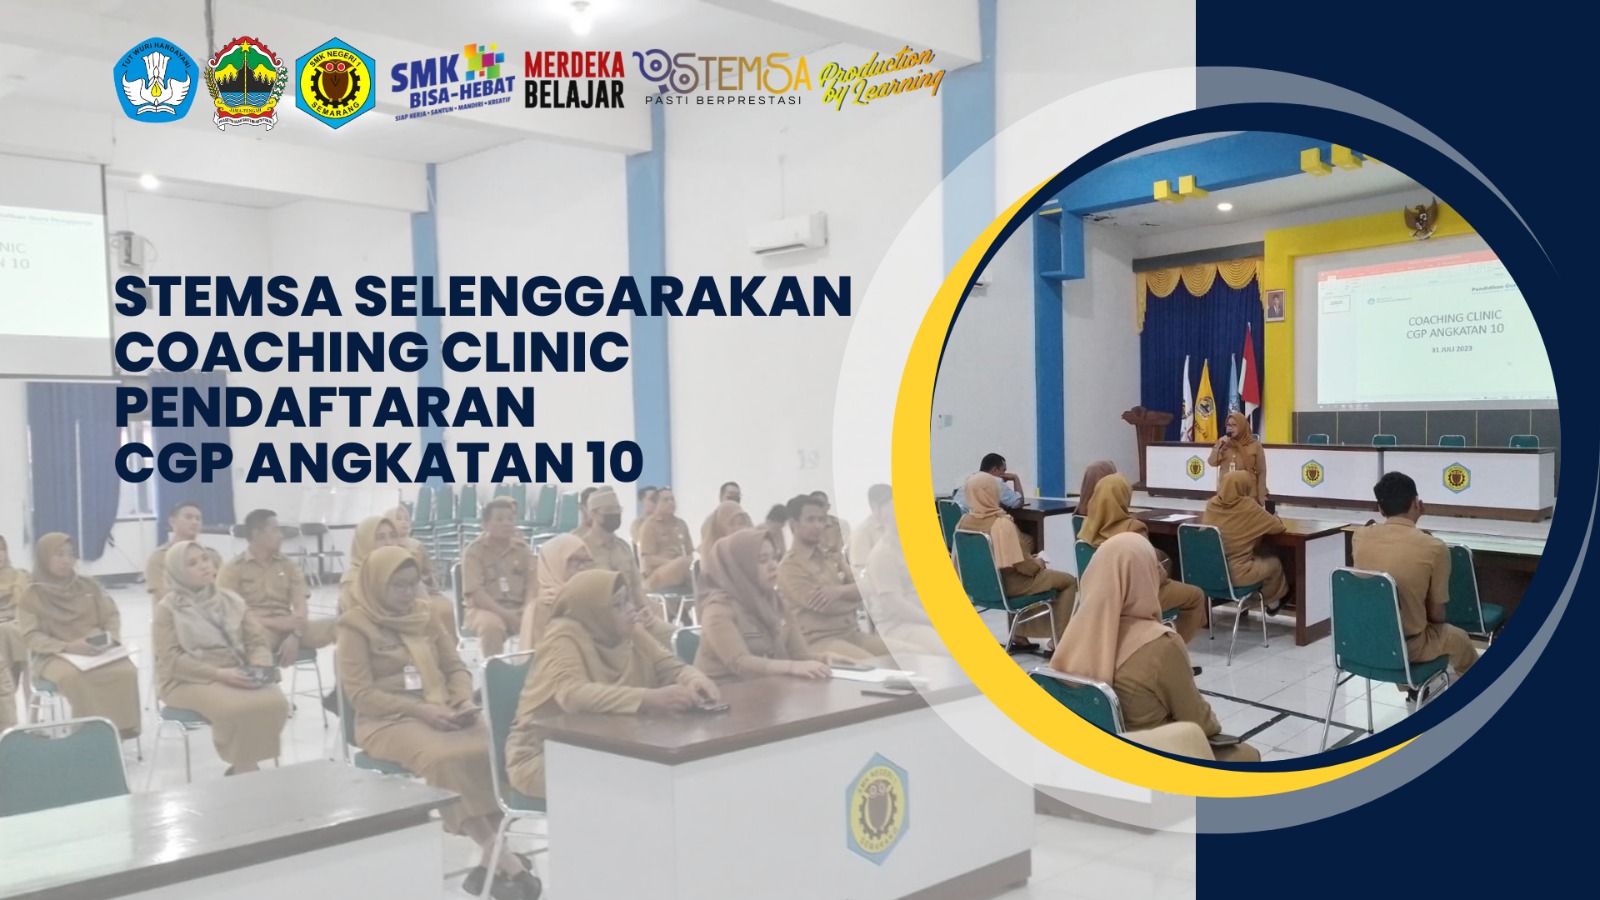 You are currently viewing STEMSA Selenggarakan Coaching Clinic Pendaftaran CGP Angkatan 10